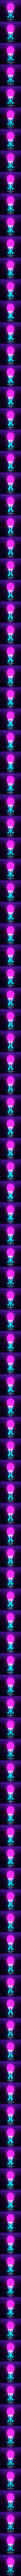 Fabergé Egg: Neon